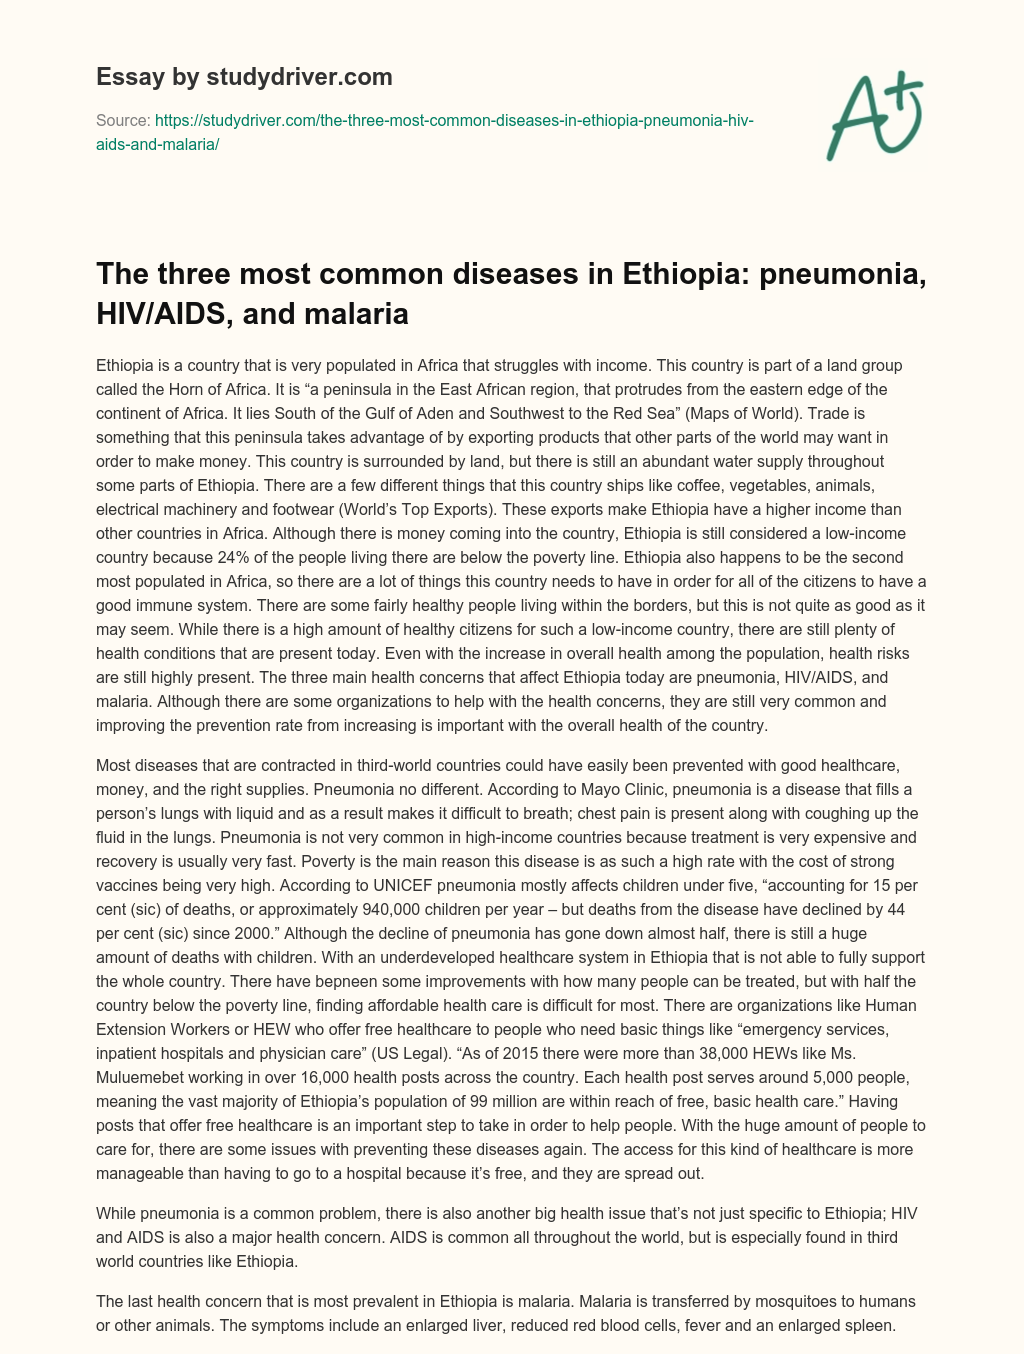 The Three most Common Diseases in Ethiopia: Pneumonia, HIV/AIDS, and Malaria essay